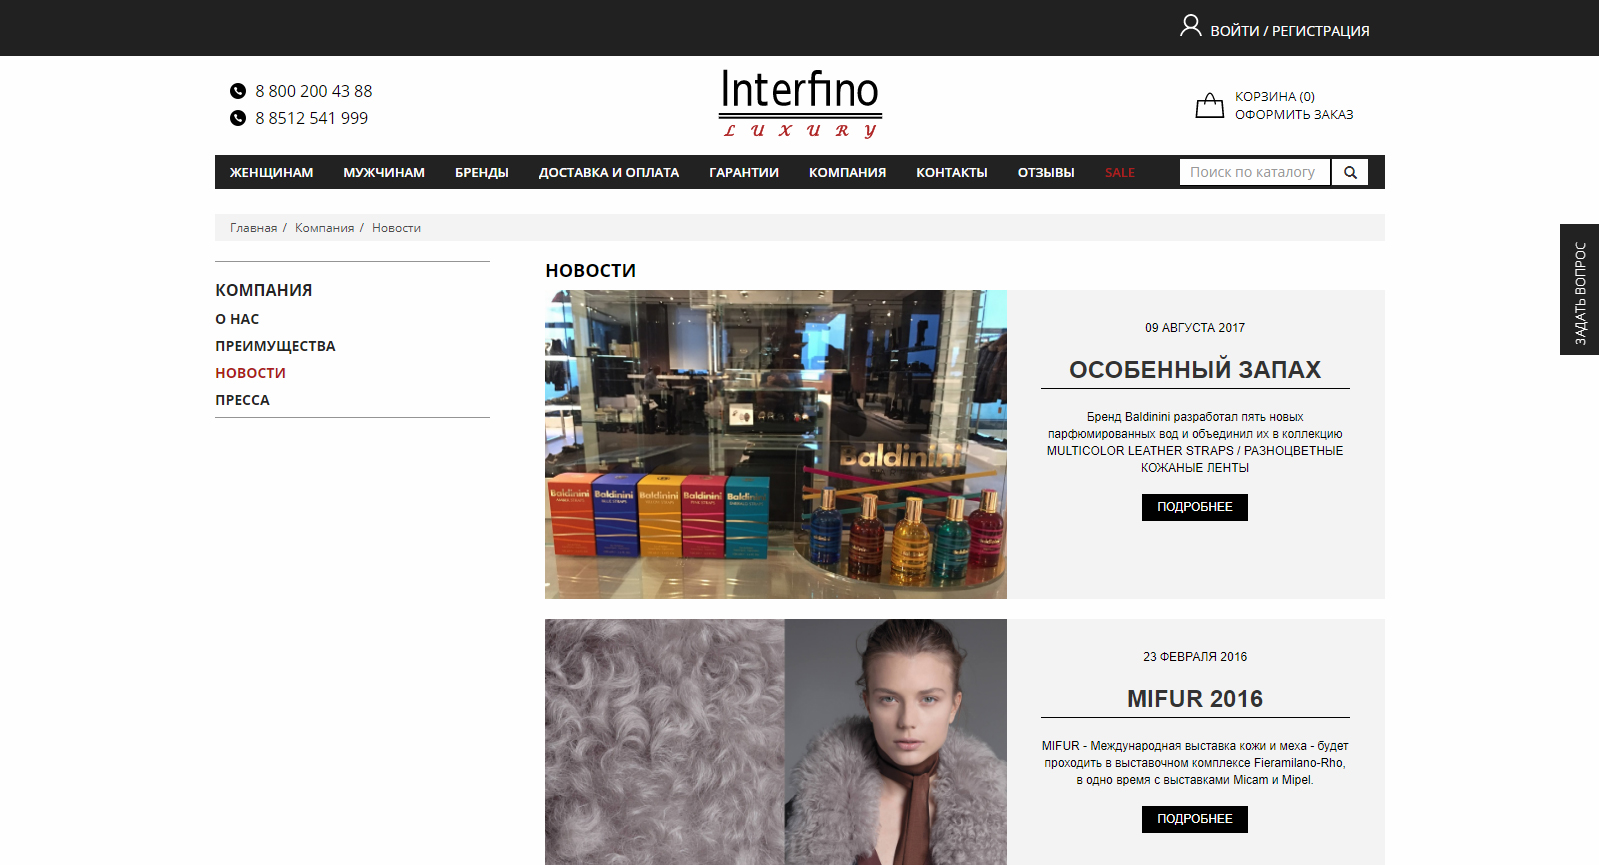 Интернет-магазин дома моды "Interfino"